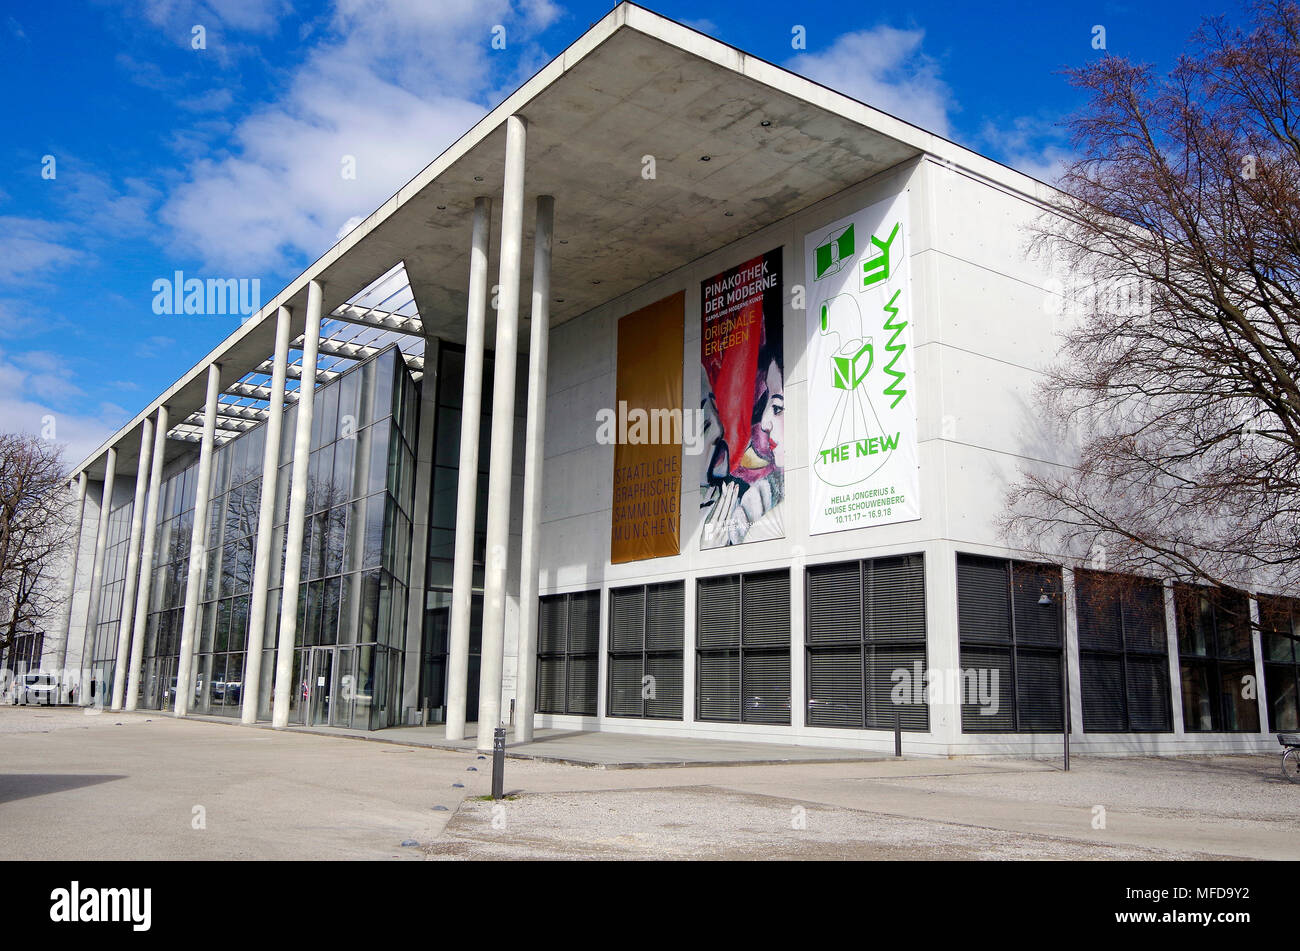 La Pinakothek der Moderne de Múnich, un moderno museo de arte contemporáneo, en Munich, el museo Kunstareal trimestre Foto de stock